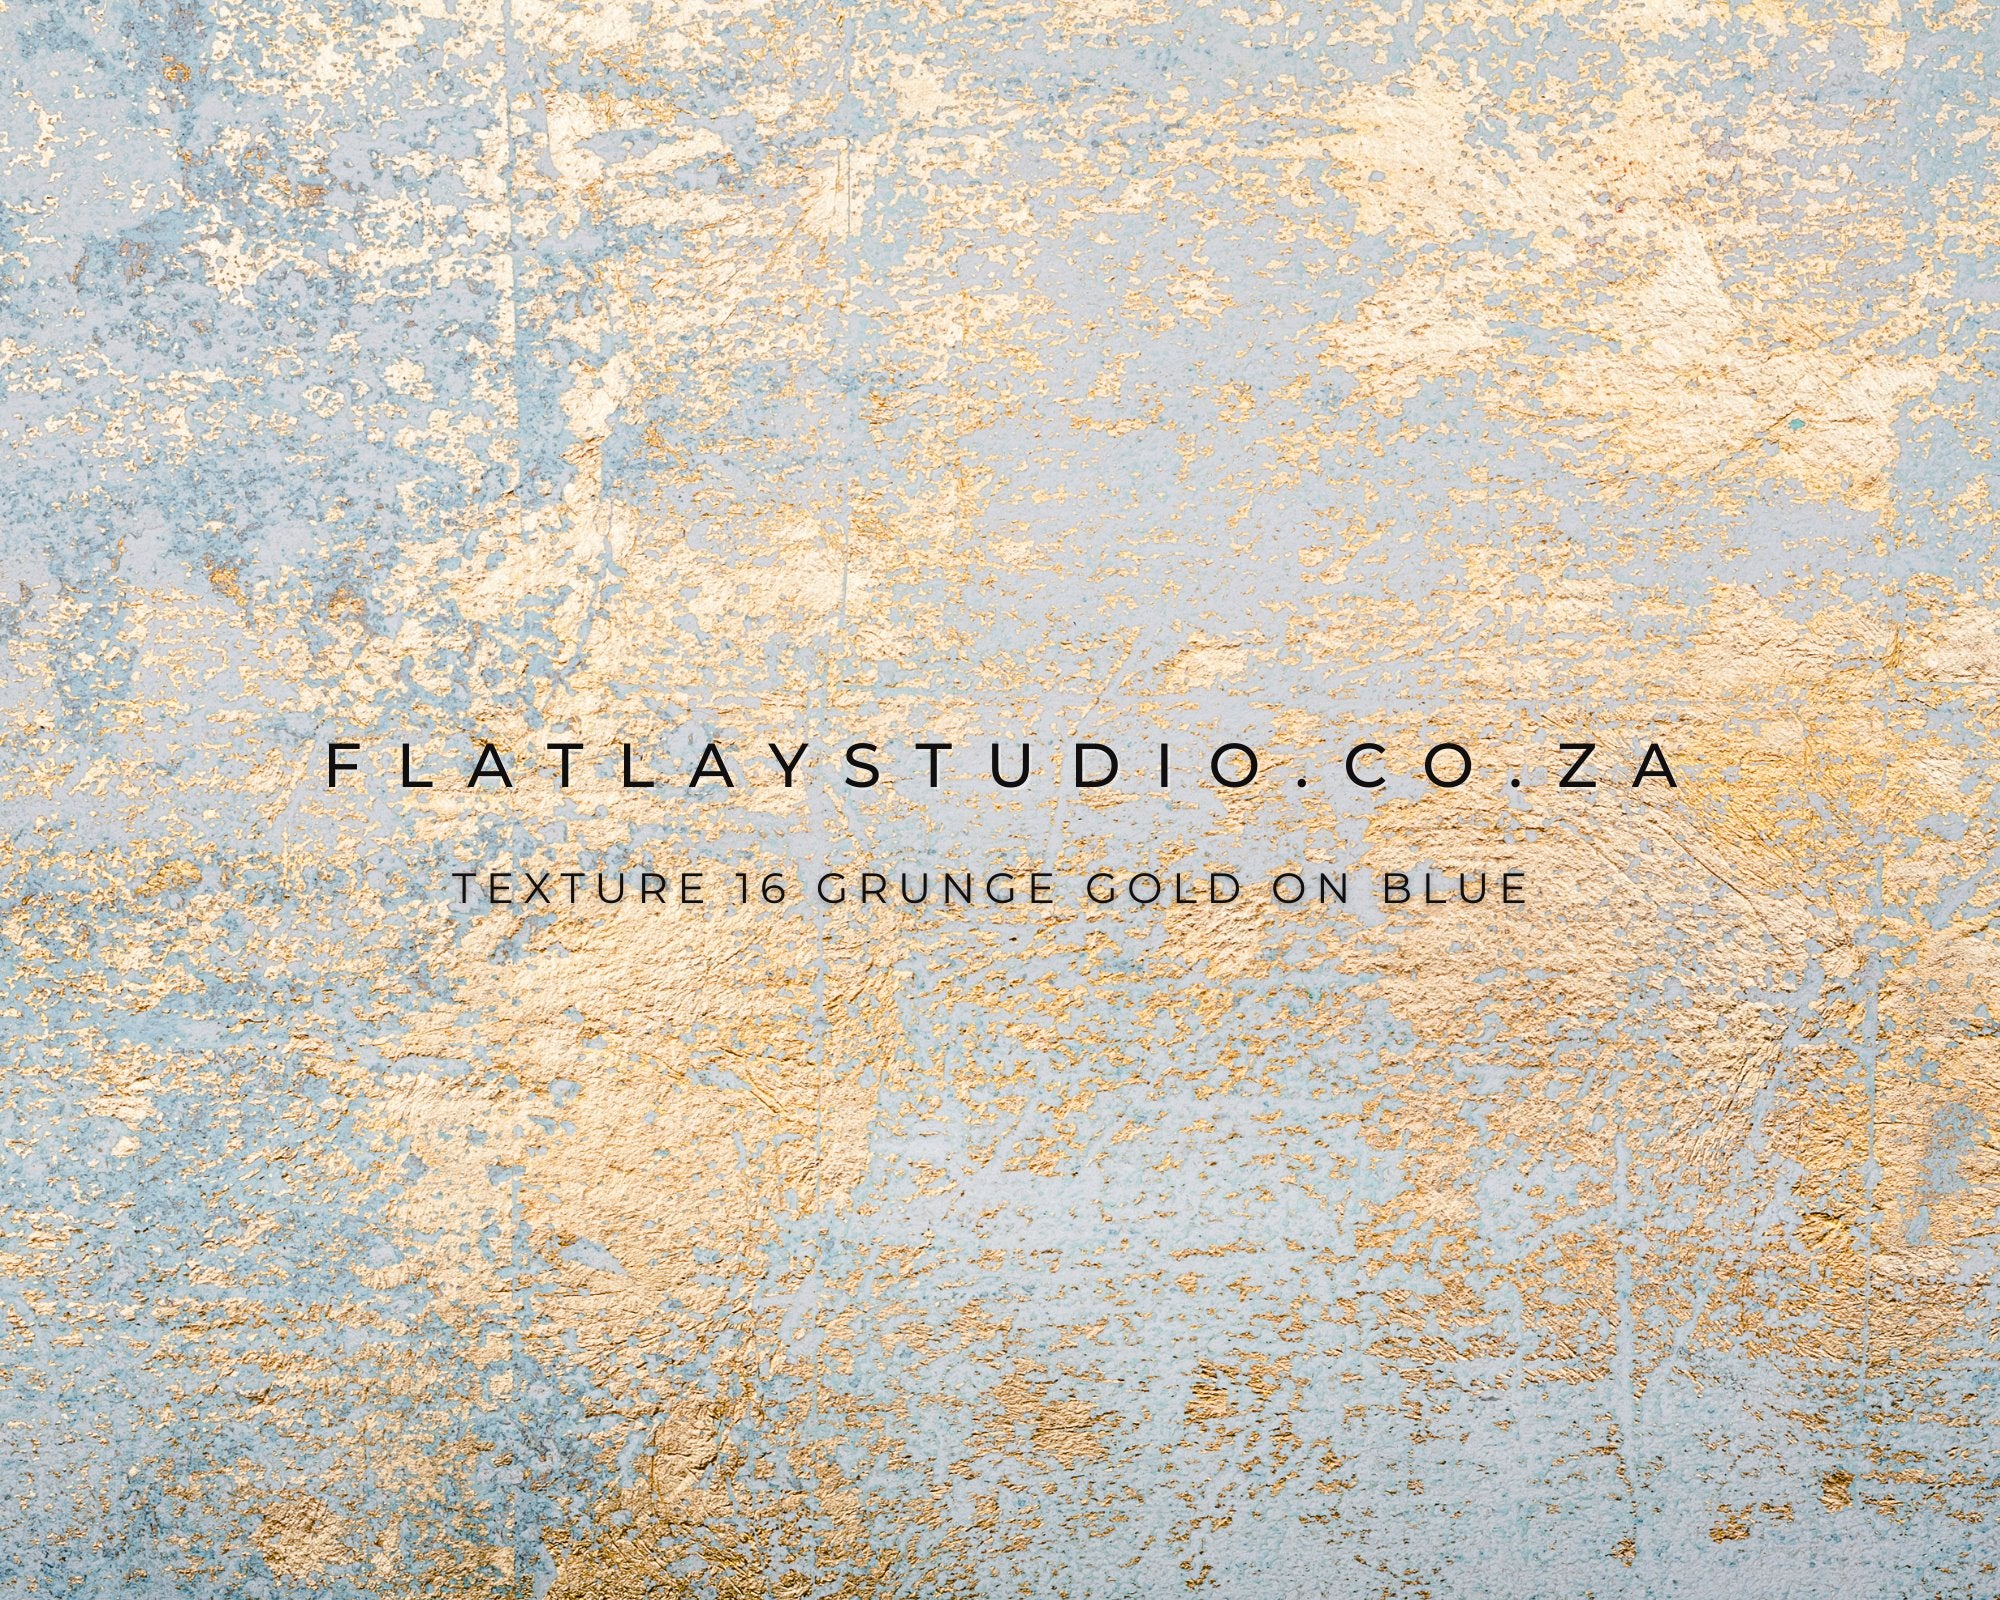 Texture 16 Grunge Gold on Blue - FlatlayStudio